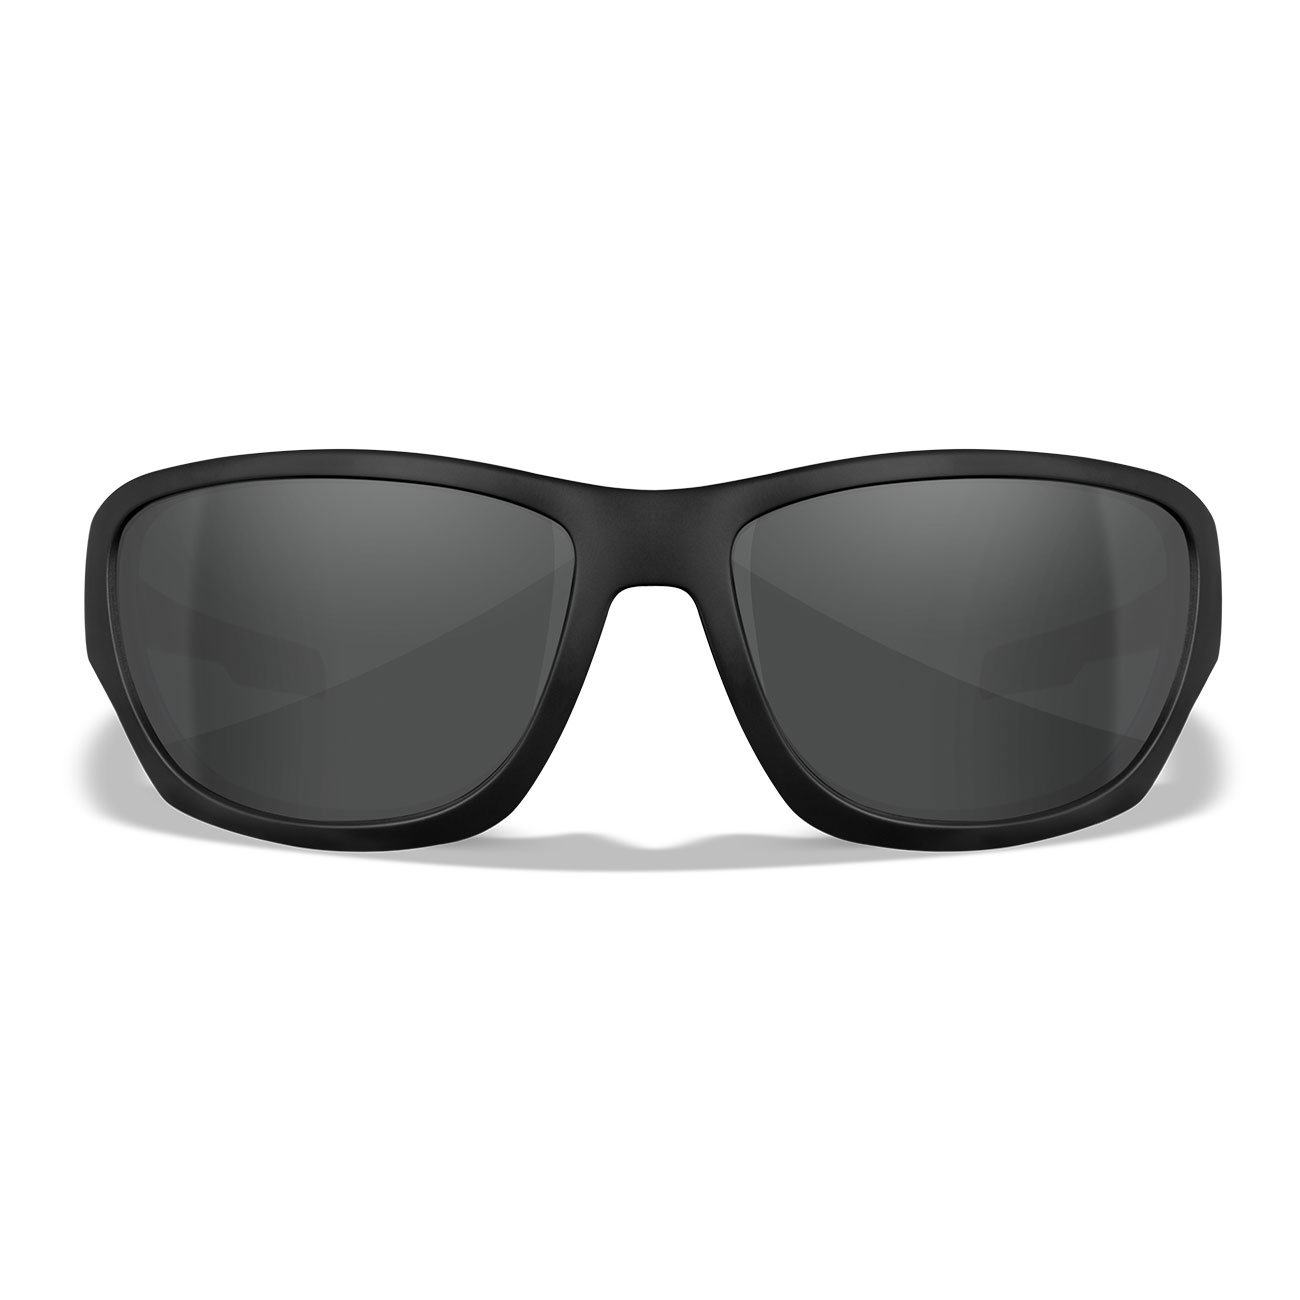 Wiley X Sonnenbrille Climb matt schwarz Glser grau inkl. Brillenetui Bild 1